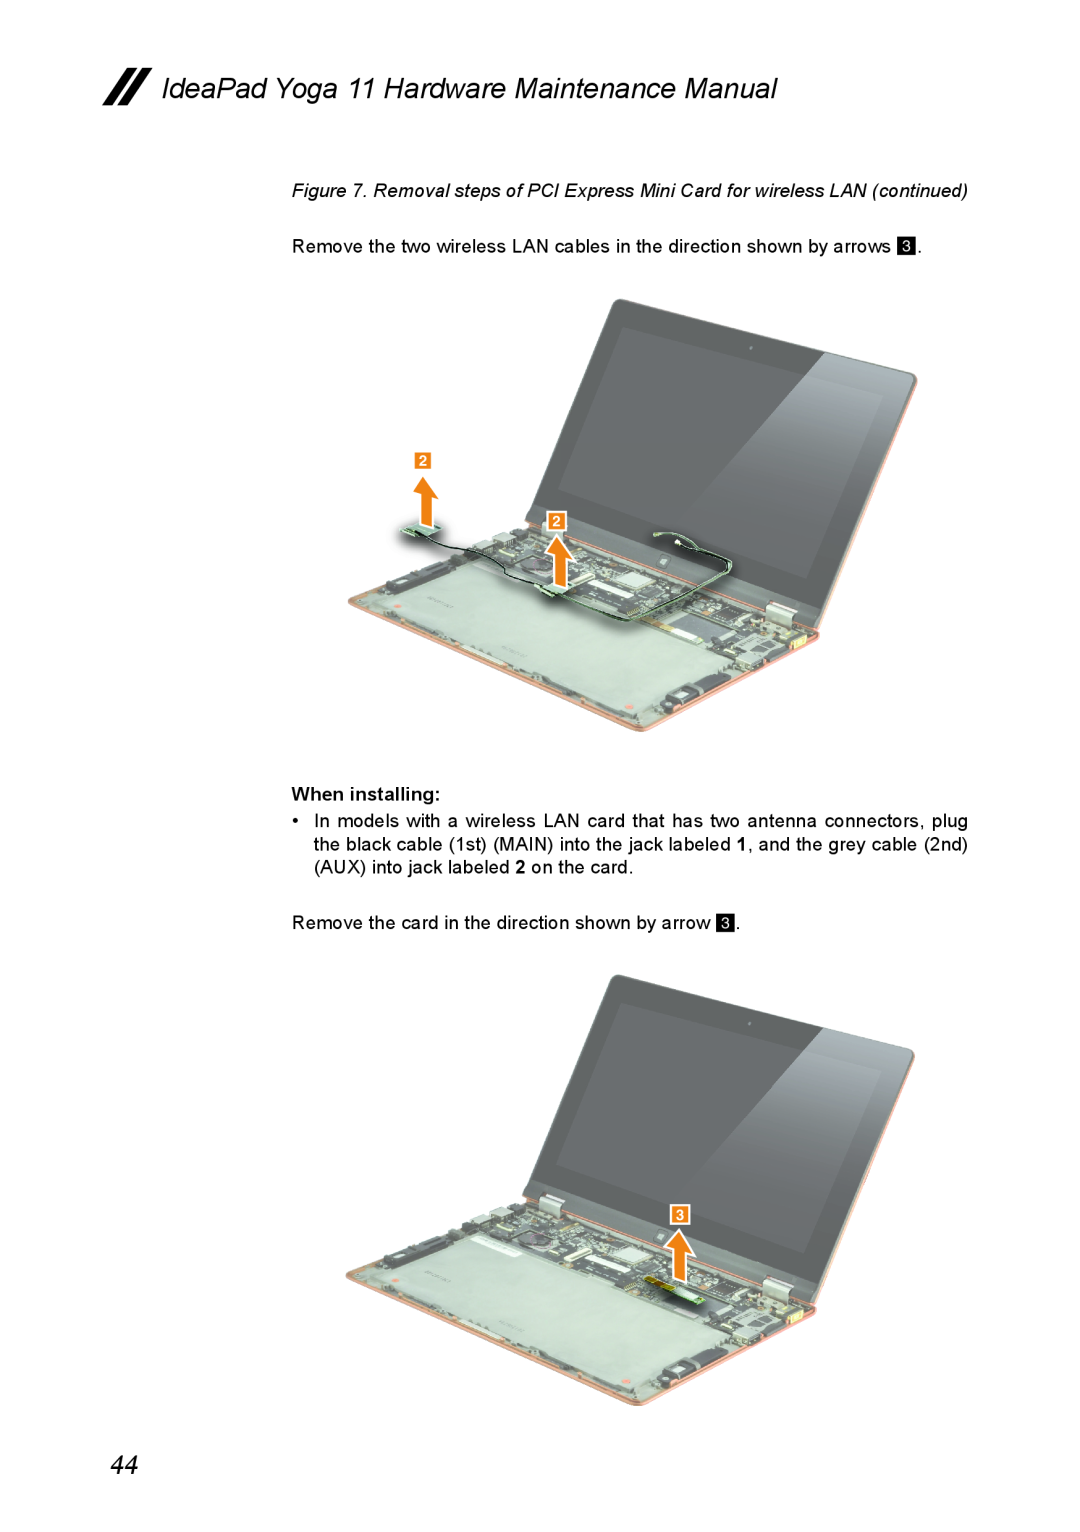 Lenovo manual When installing, IdeaPad Yoga 11 Hardware Maintenance Manual 